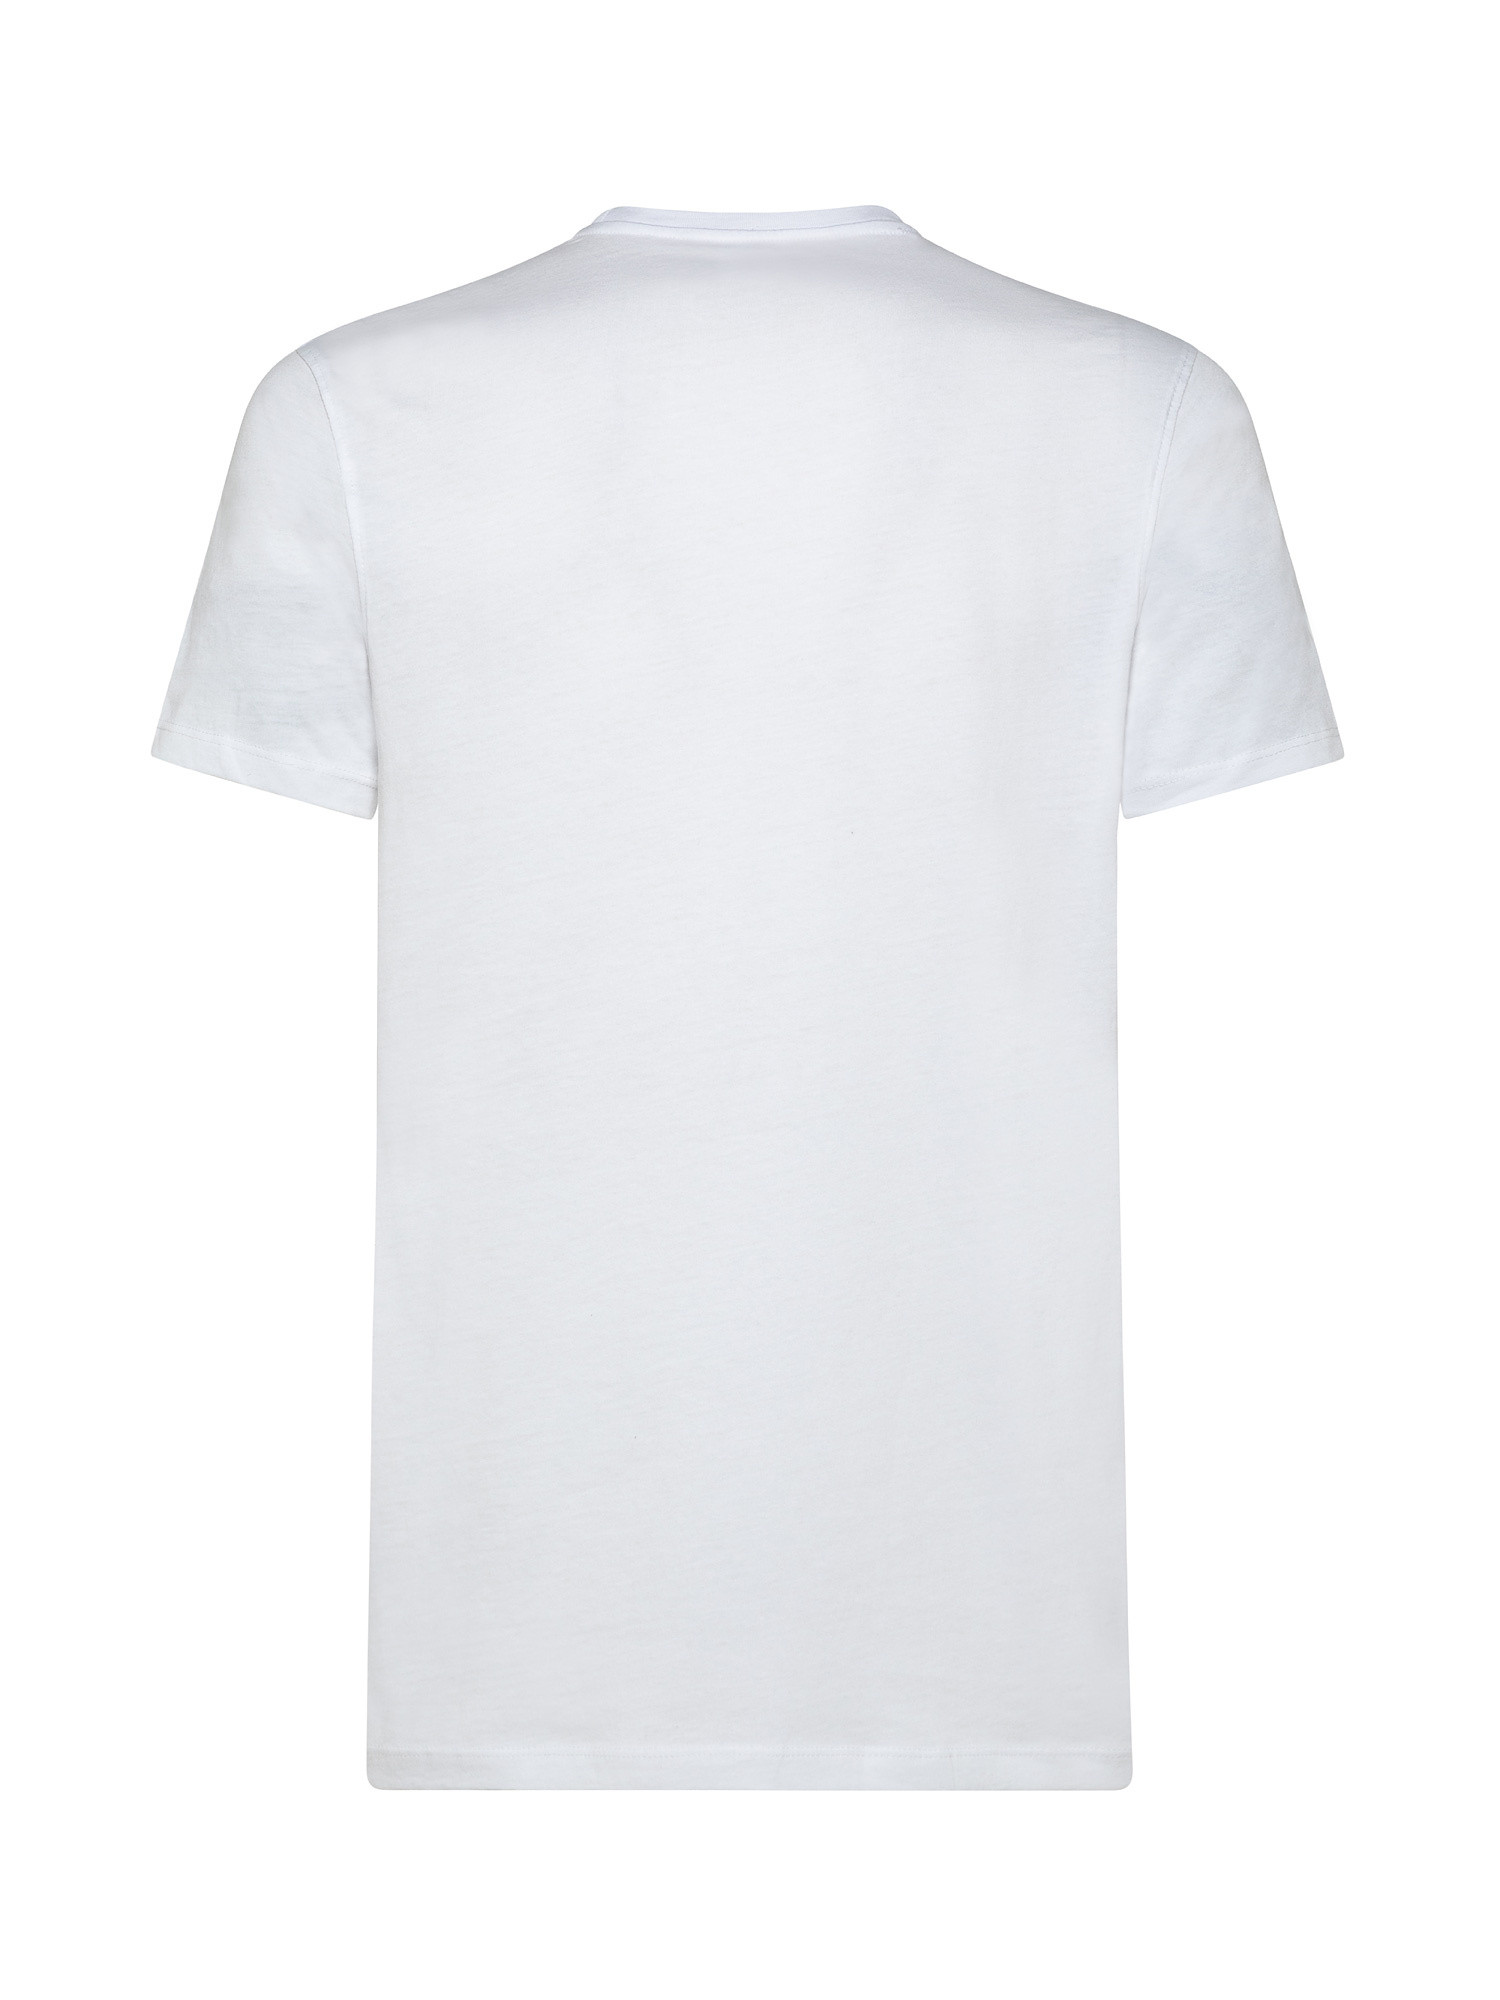 T-shirt girocollo cotone supima tinta unita, Bianco, large